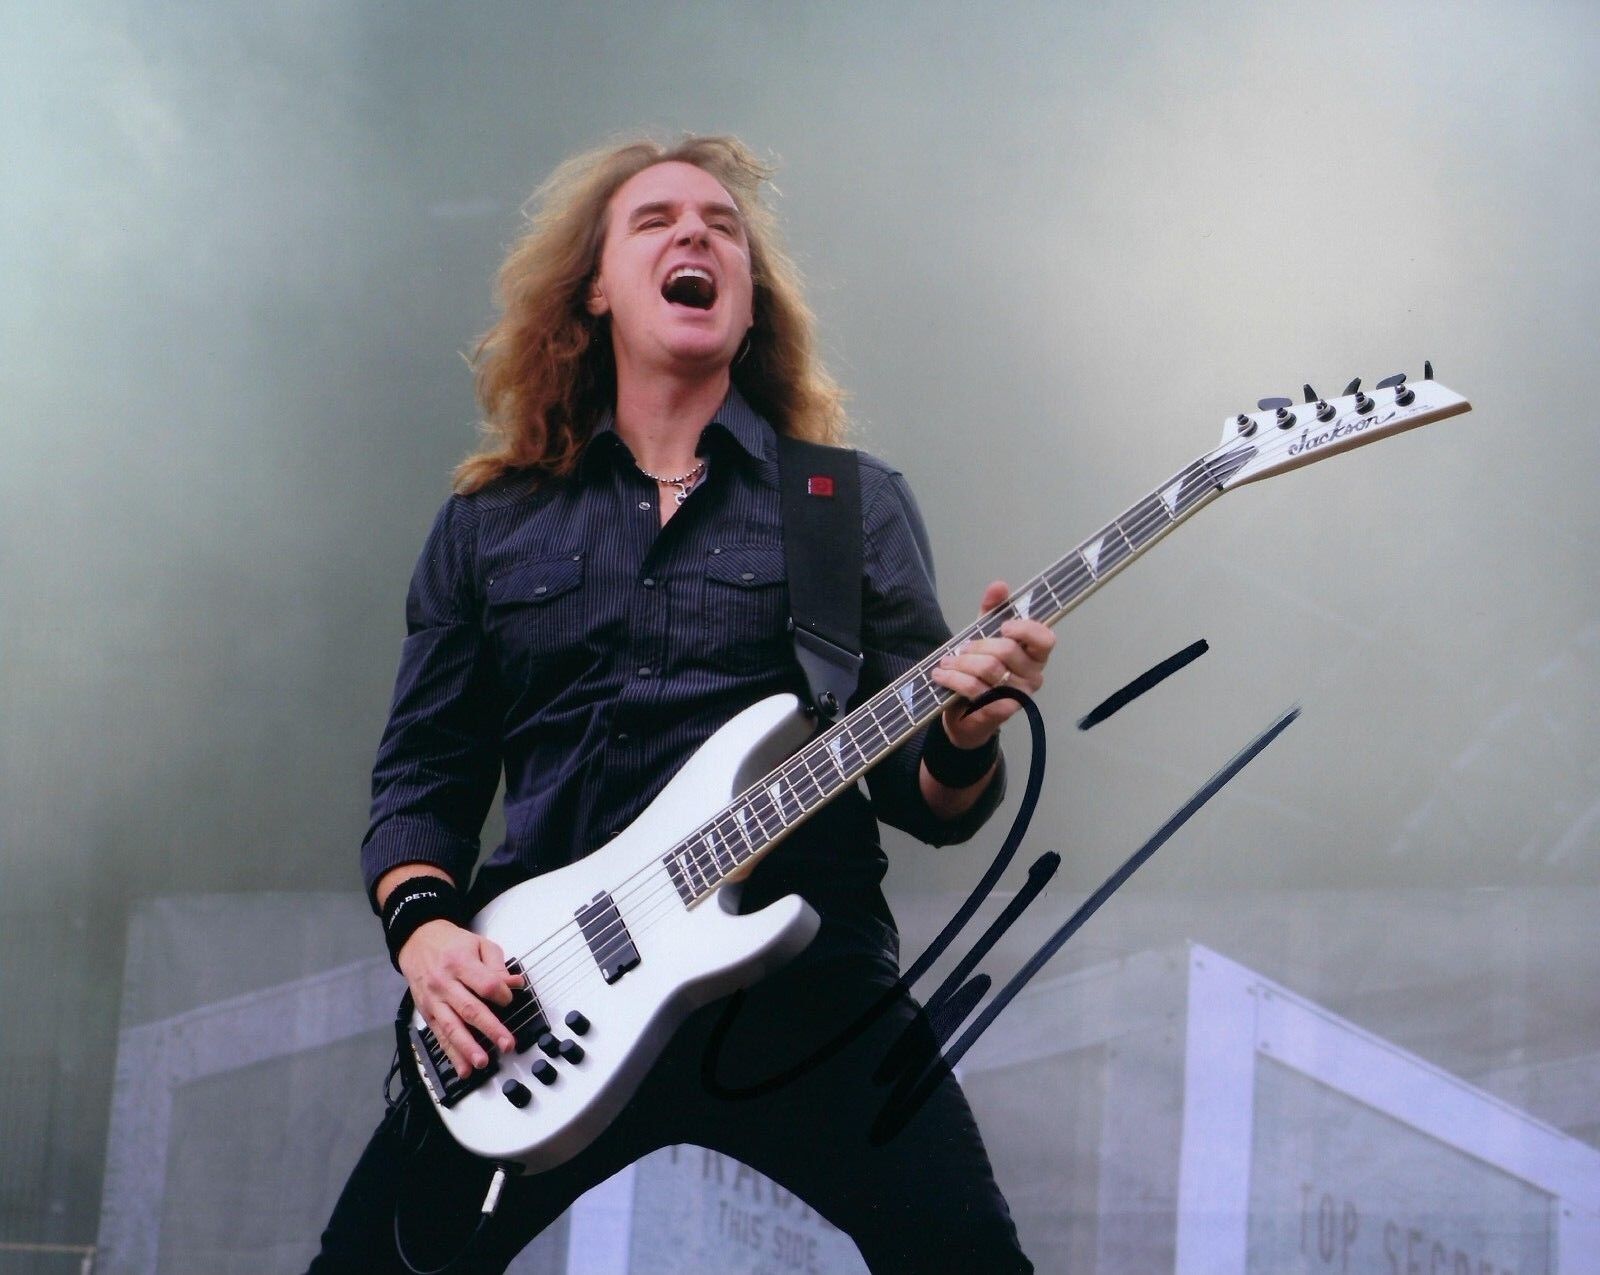 GFA Megadeth Metal Band * DAVID ELLEFSON * Signed 8x10 Photo Poster painting PROOF AD2 COA